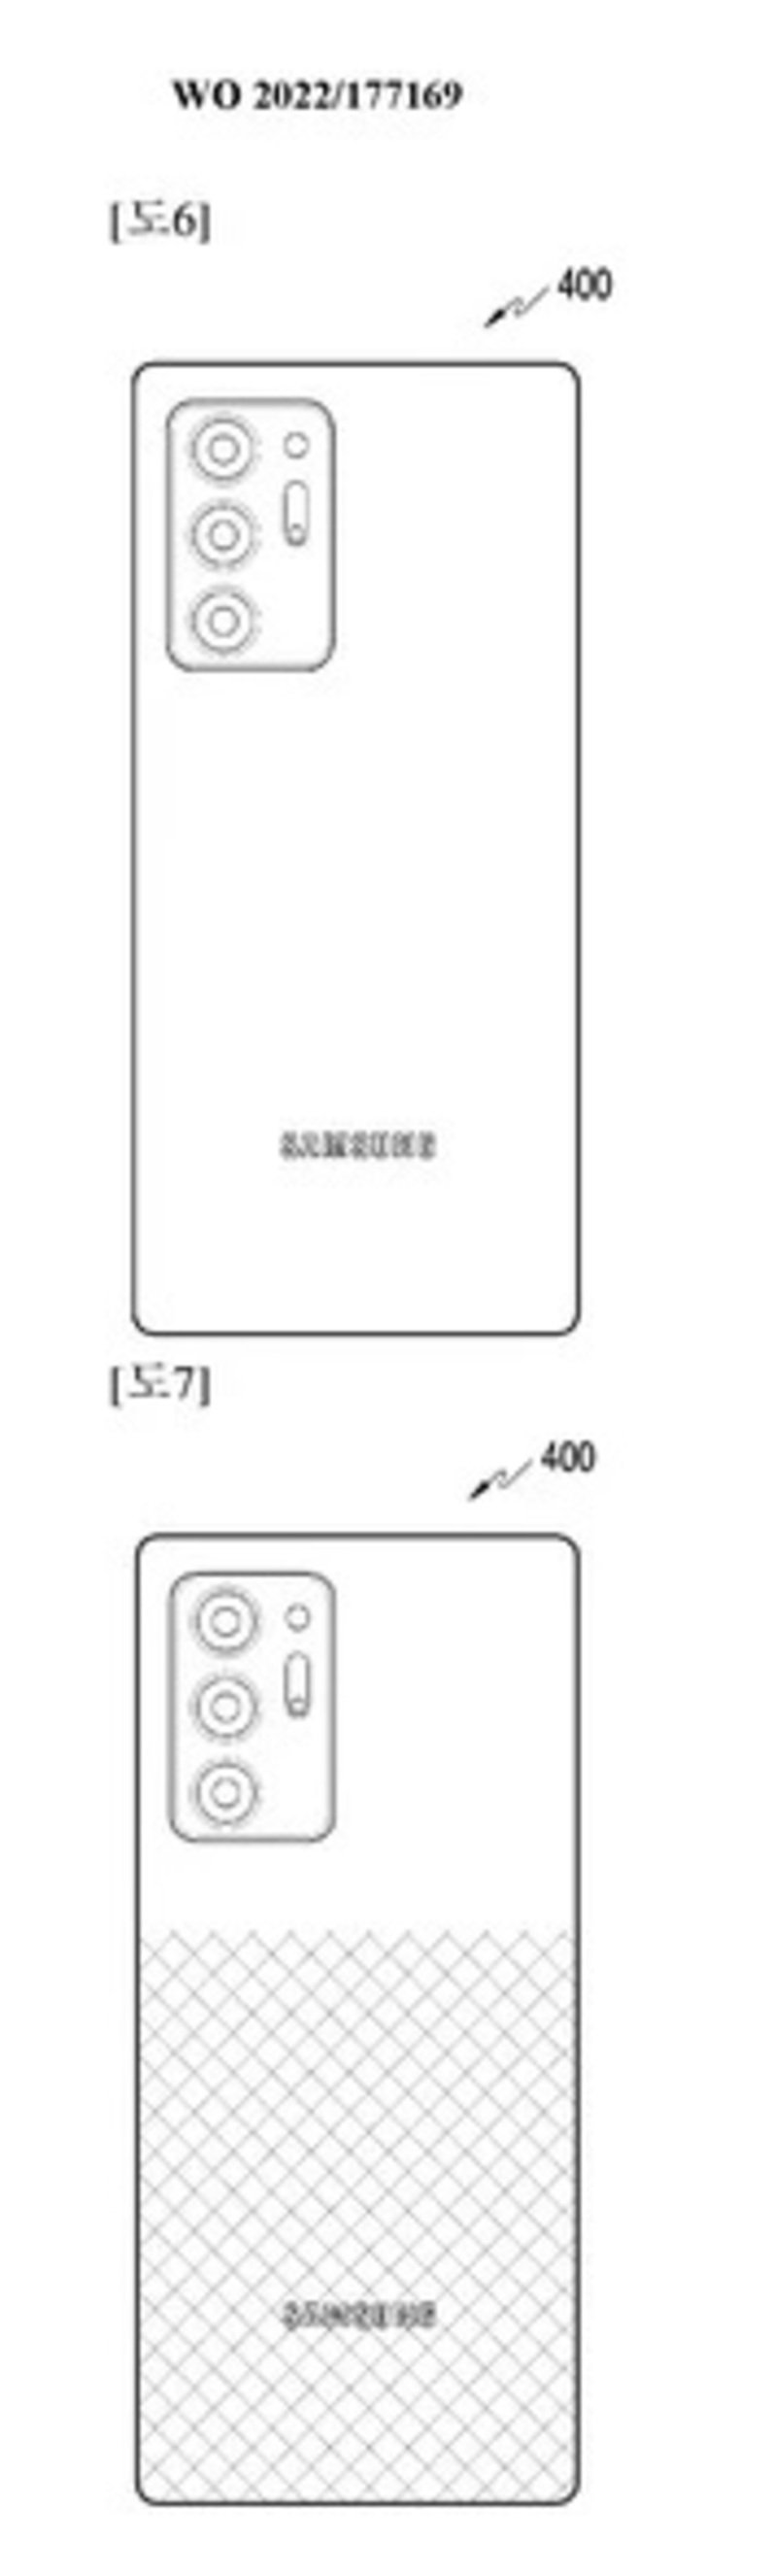 Samsung patent na smartfon z dwoma ekranami